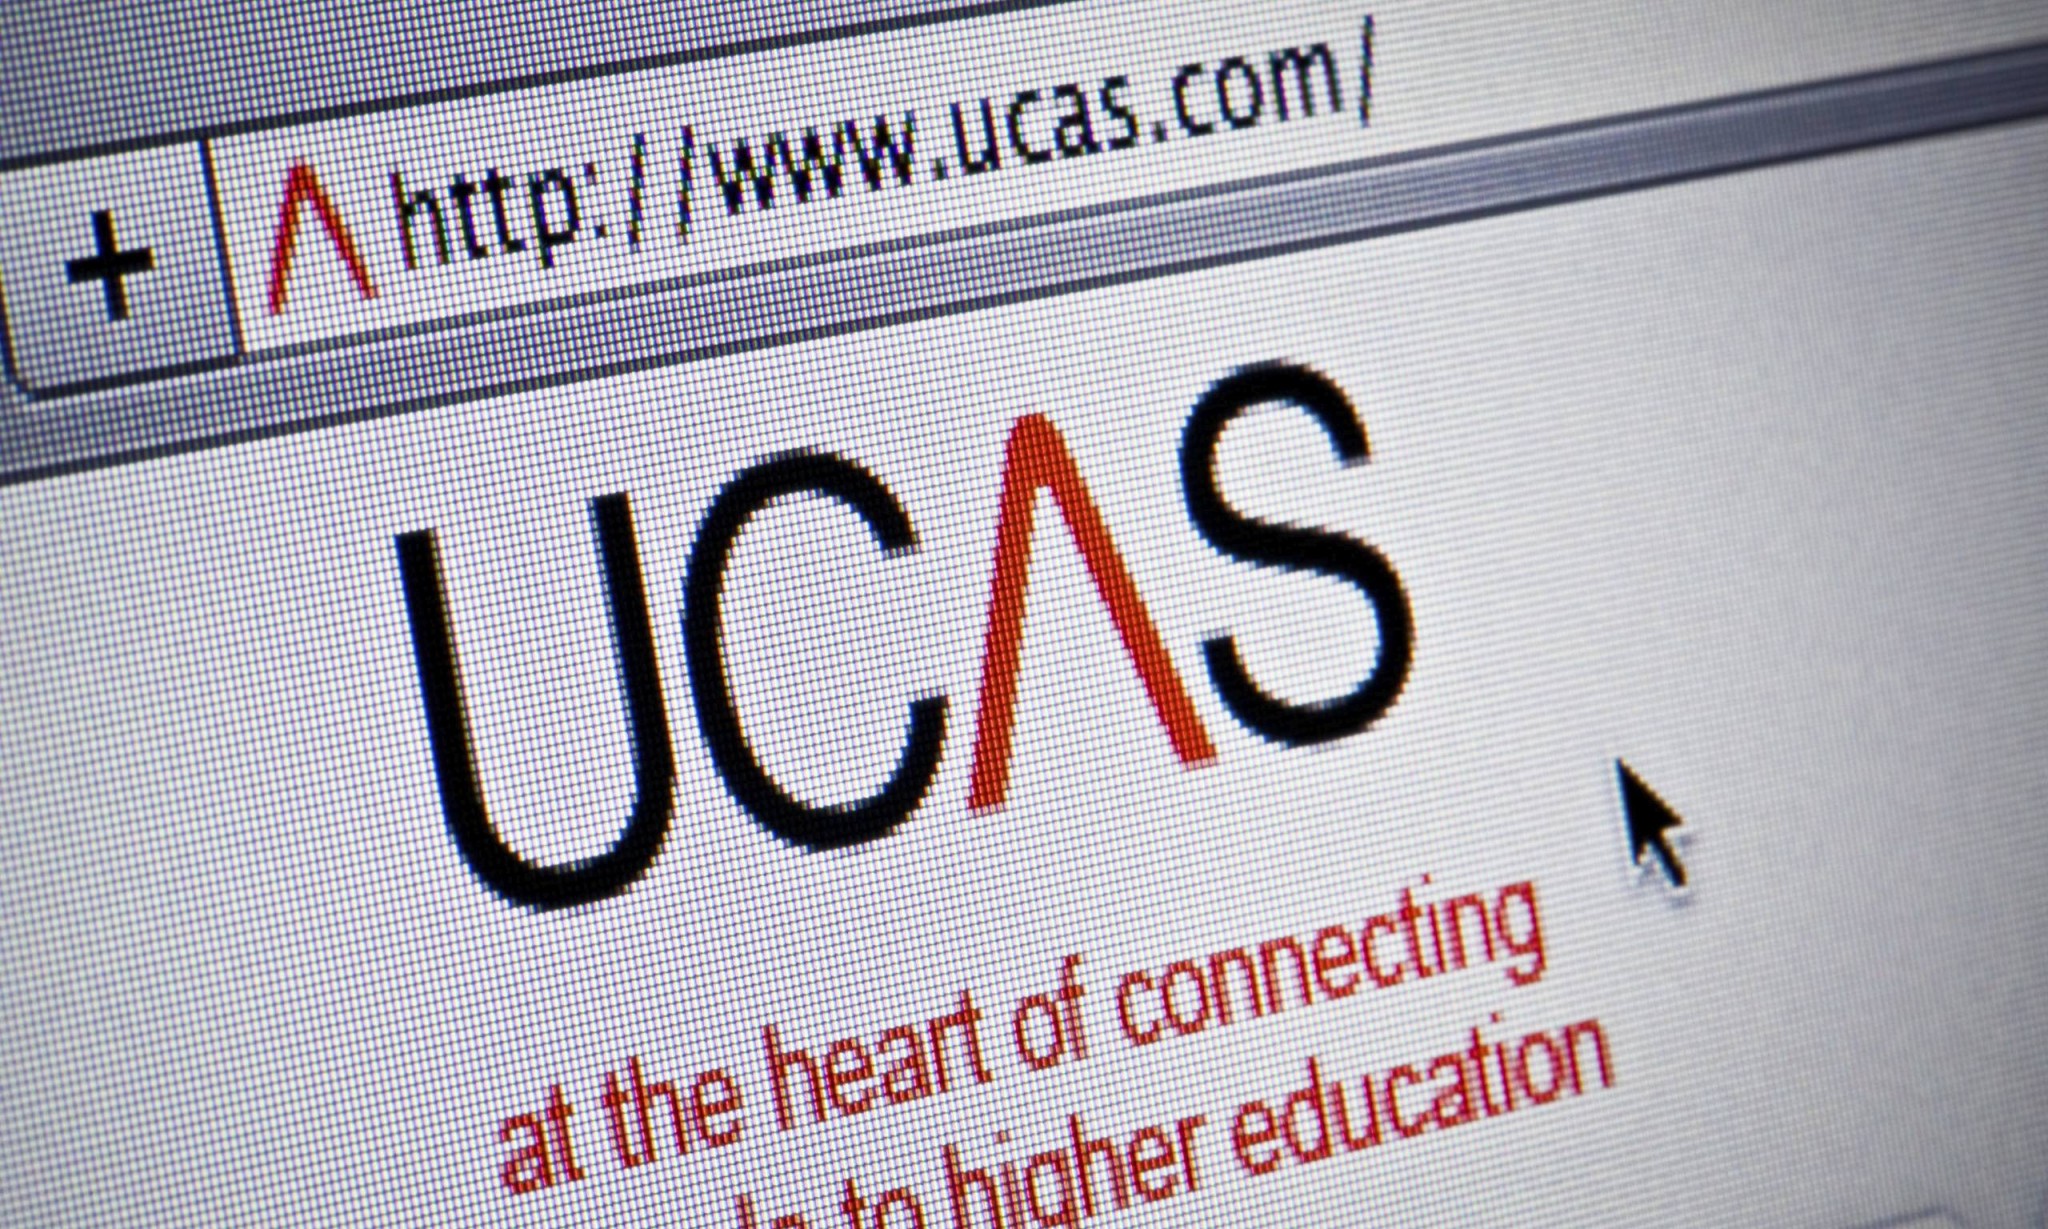 ucas-website-009.jpg